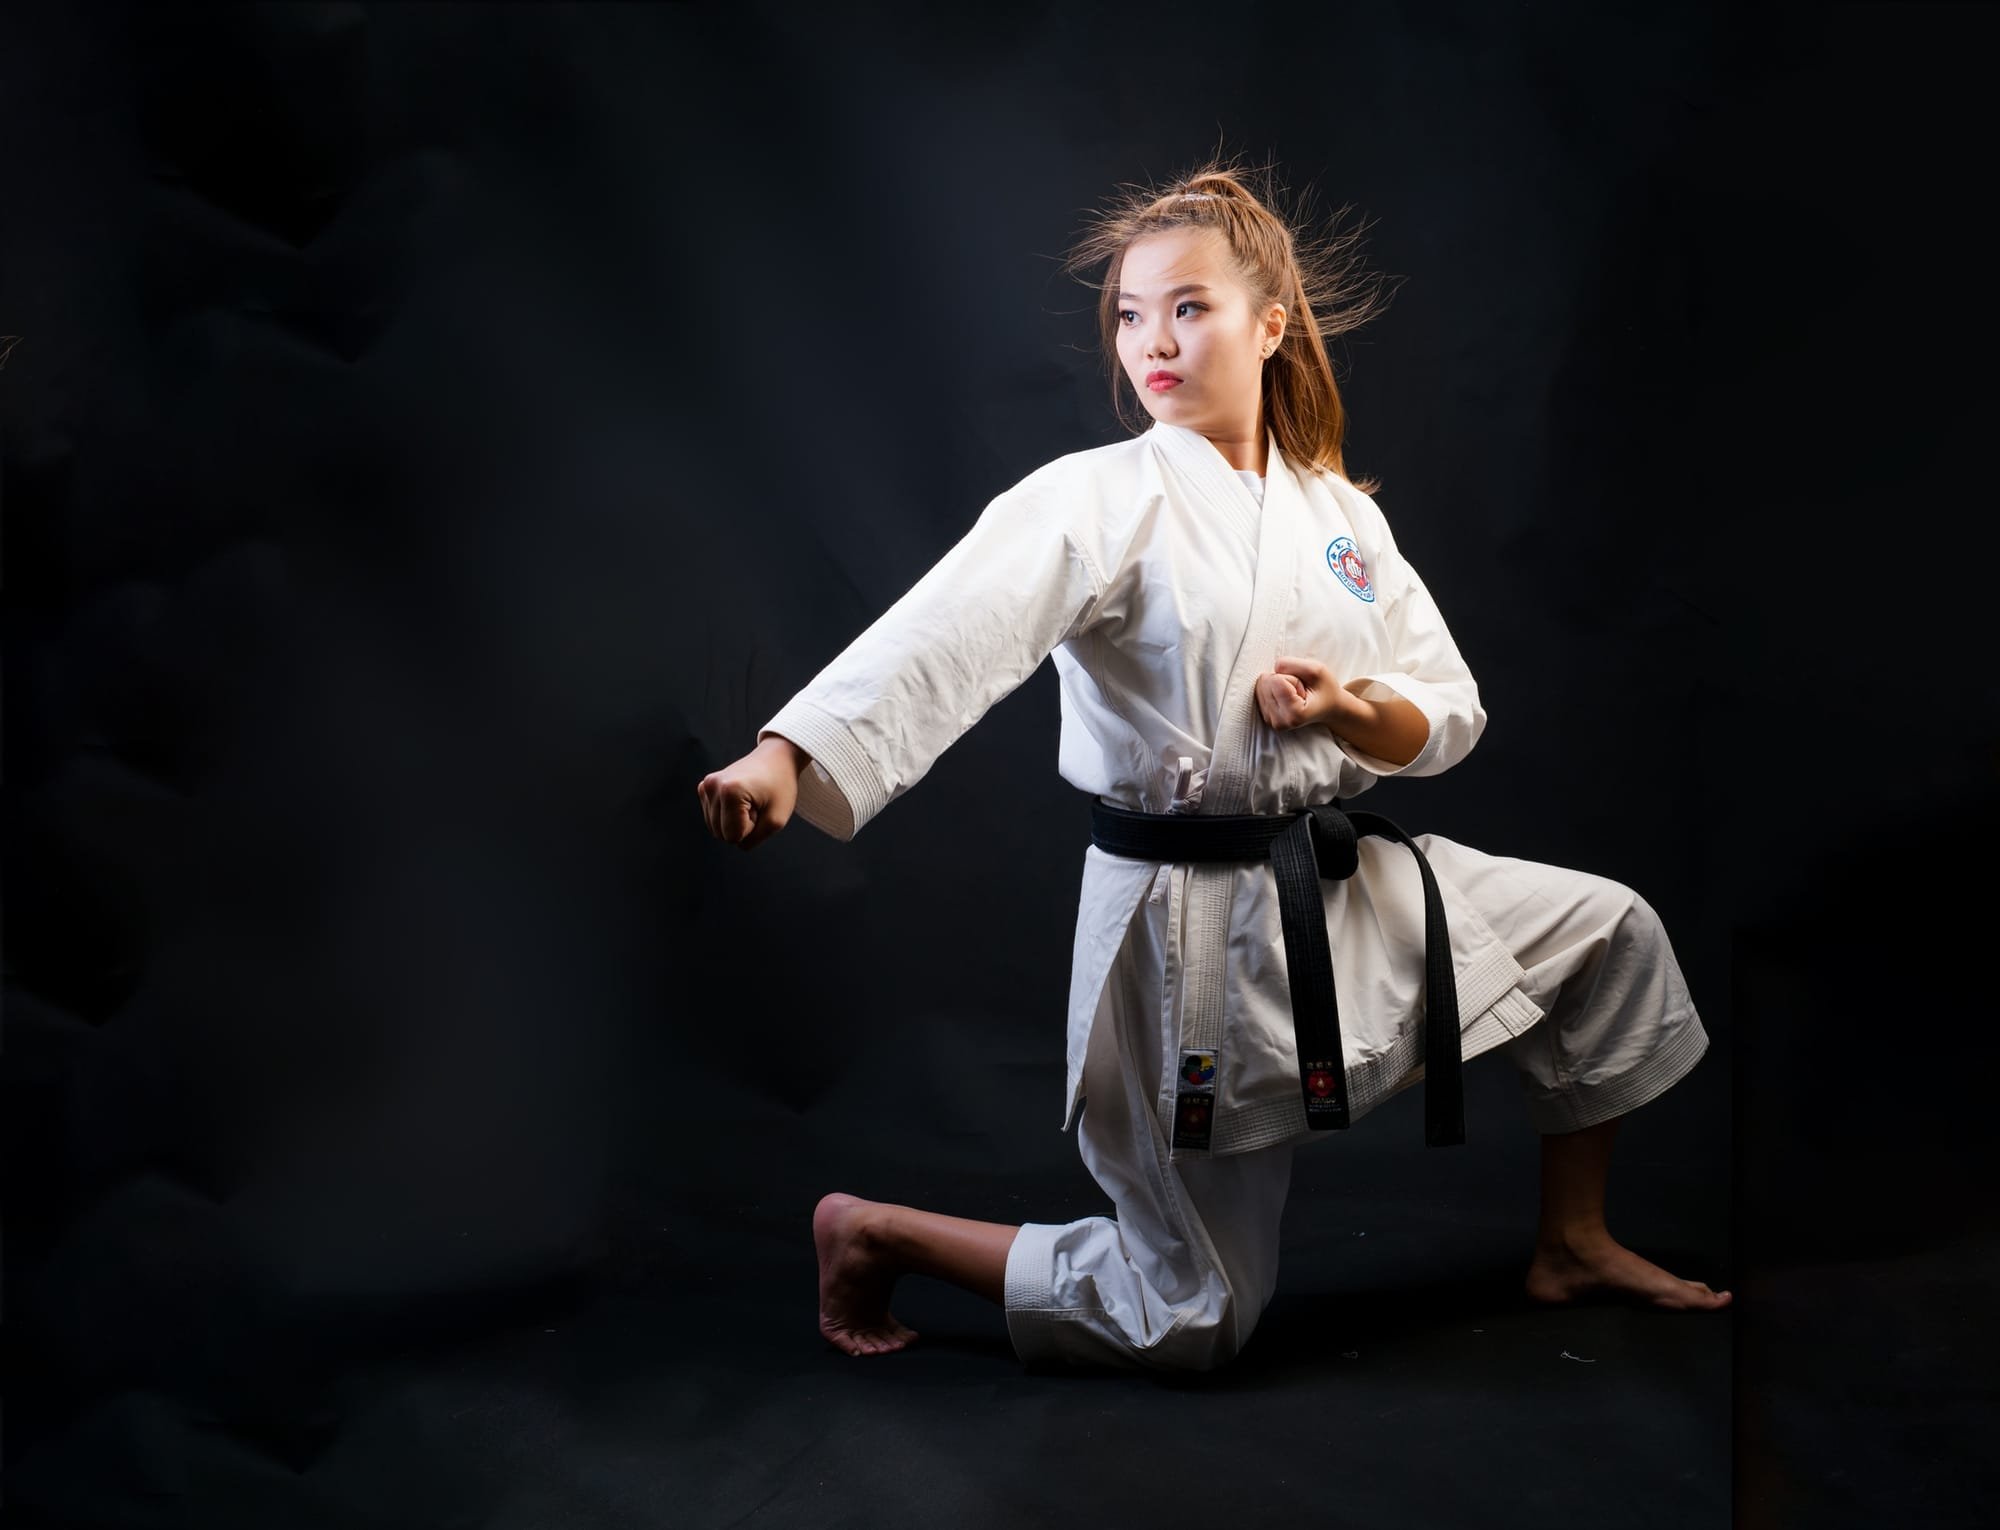 shotokan karate stances